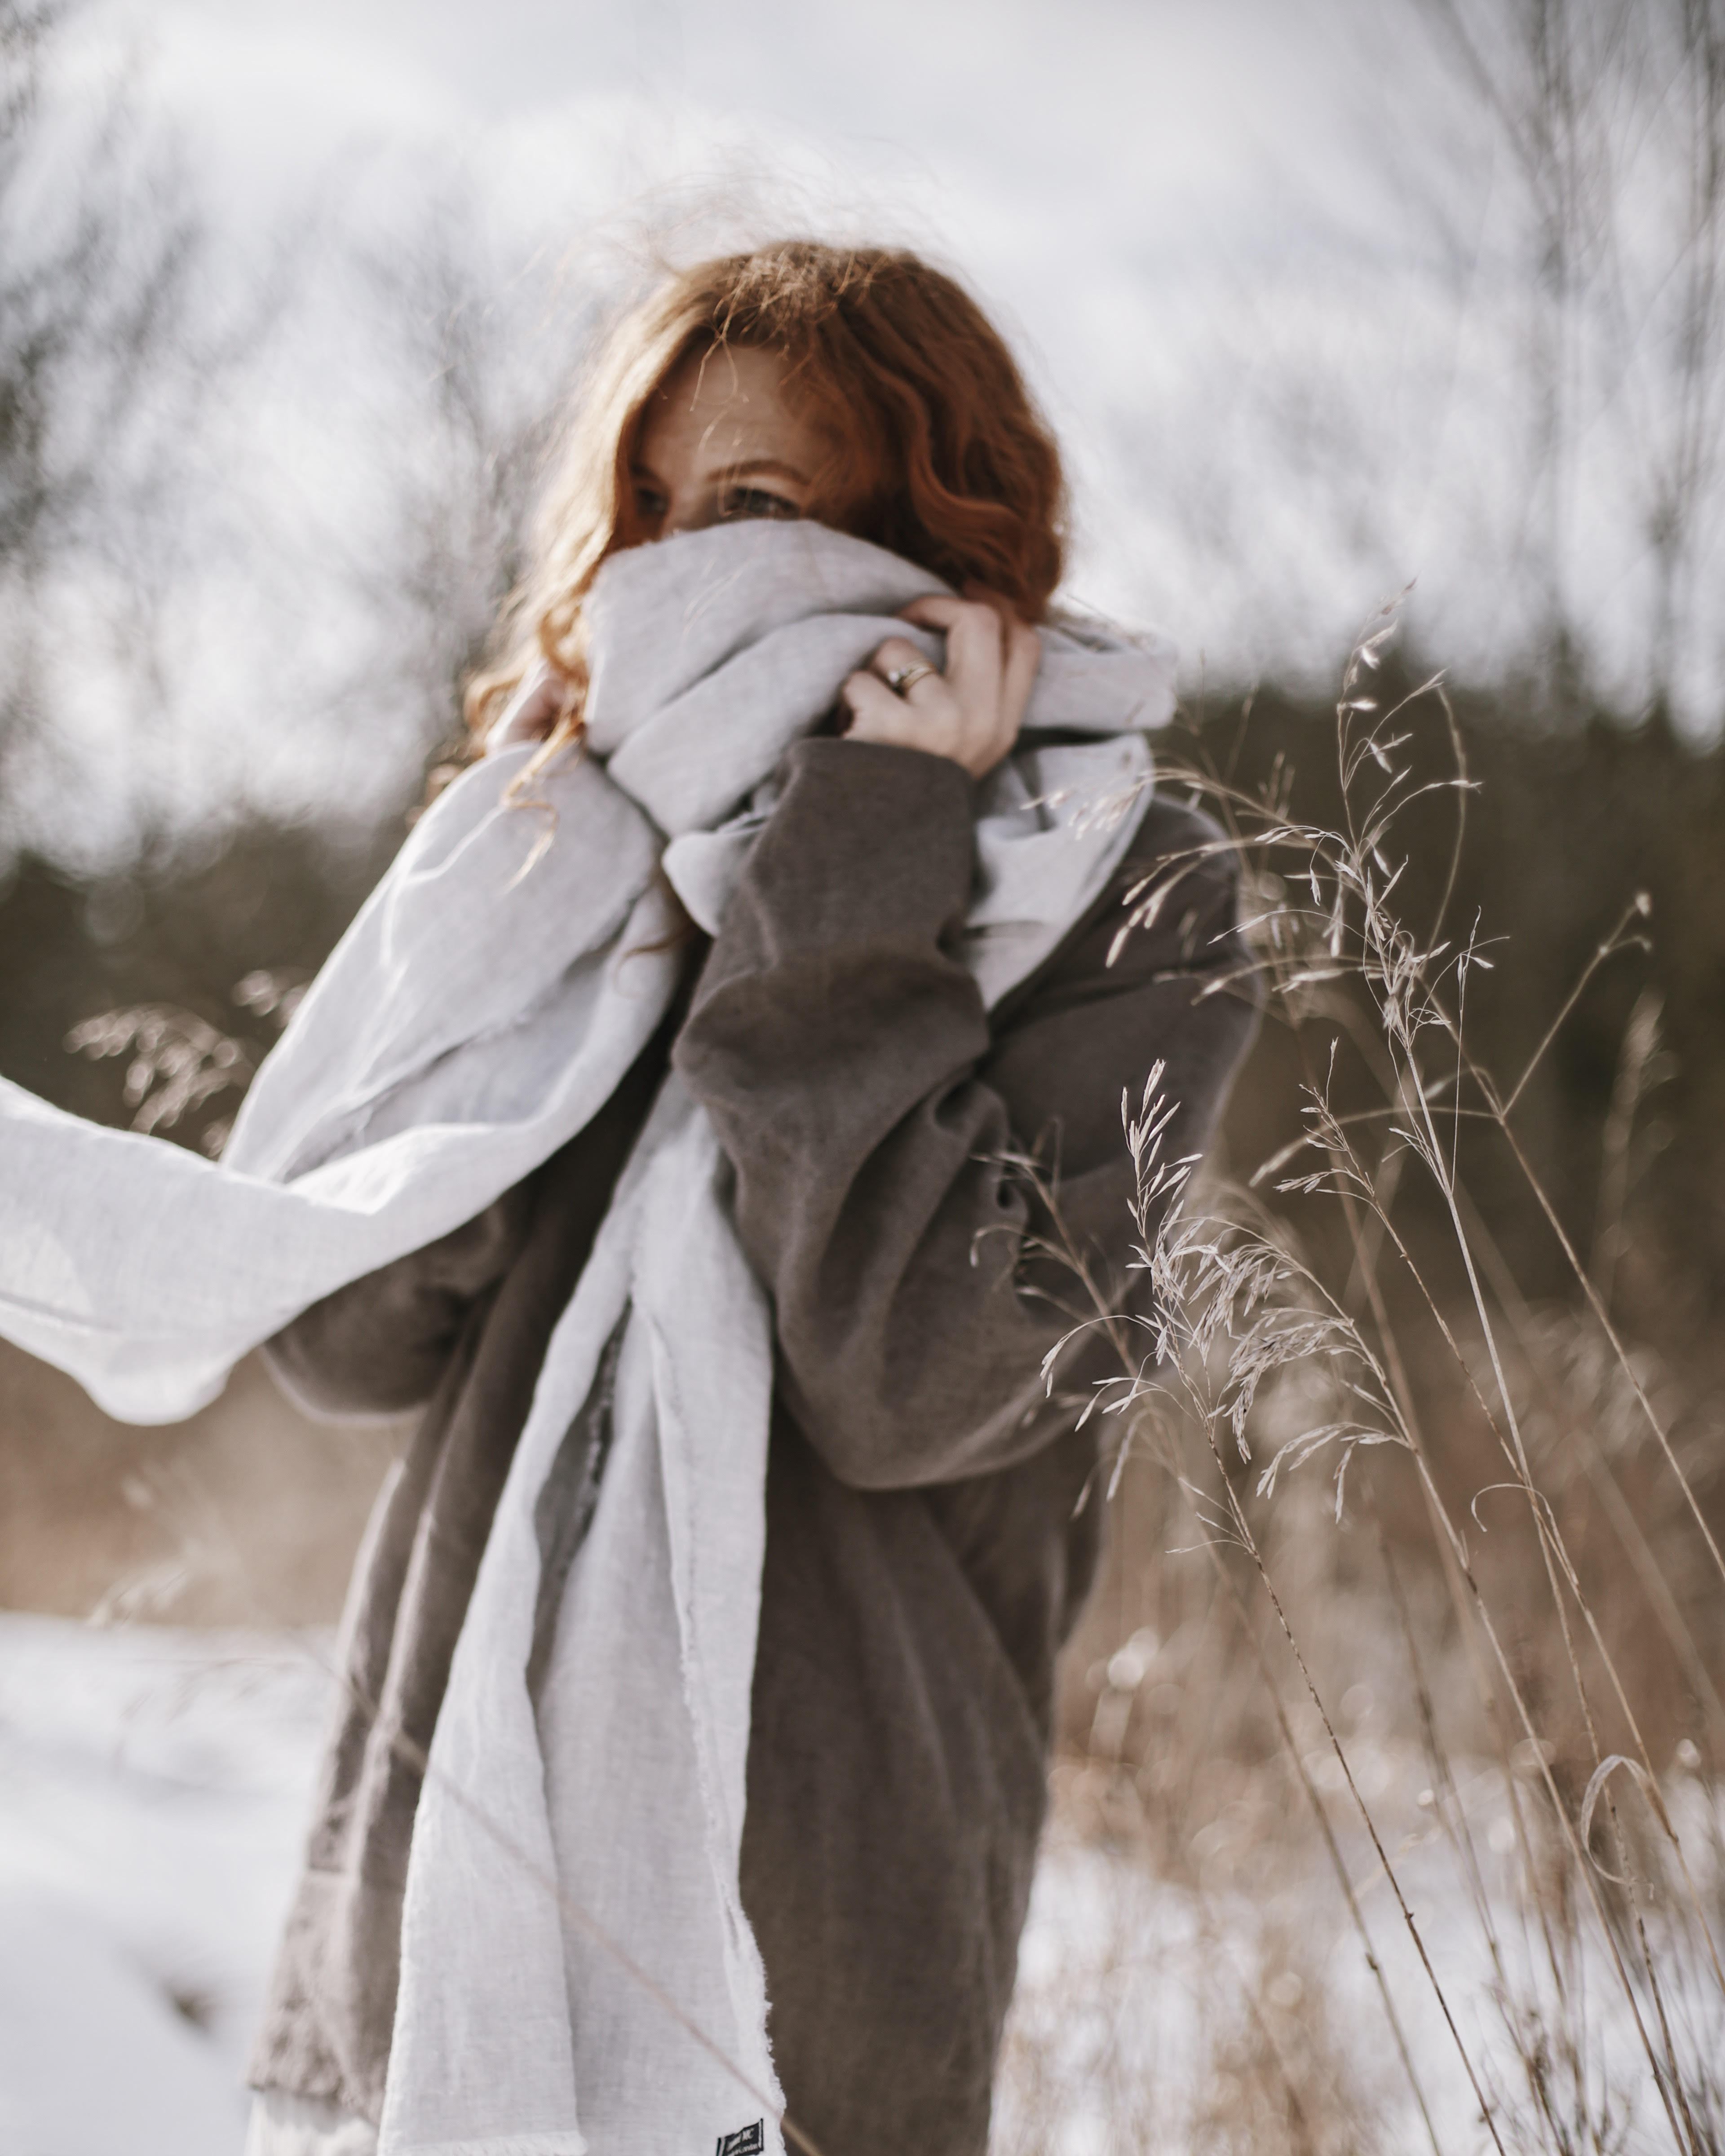 Linen in winter...by Helena Moore